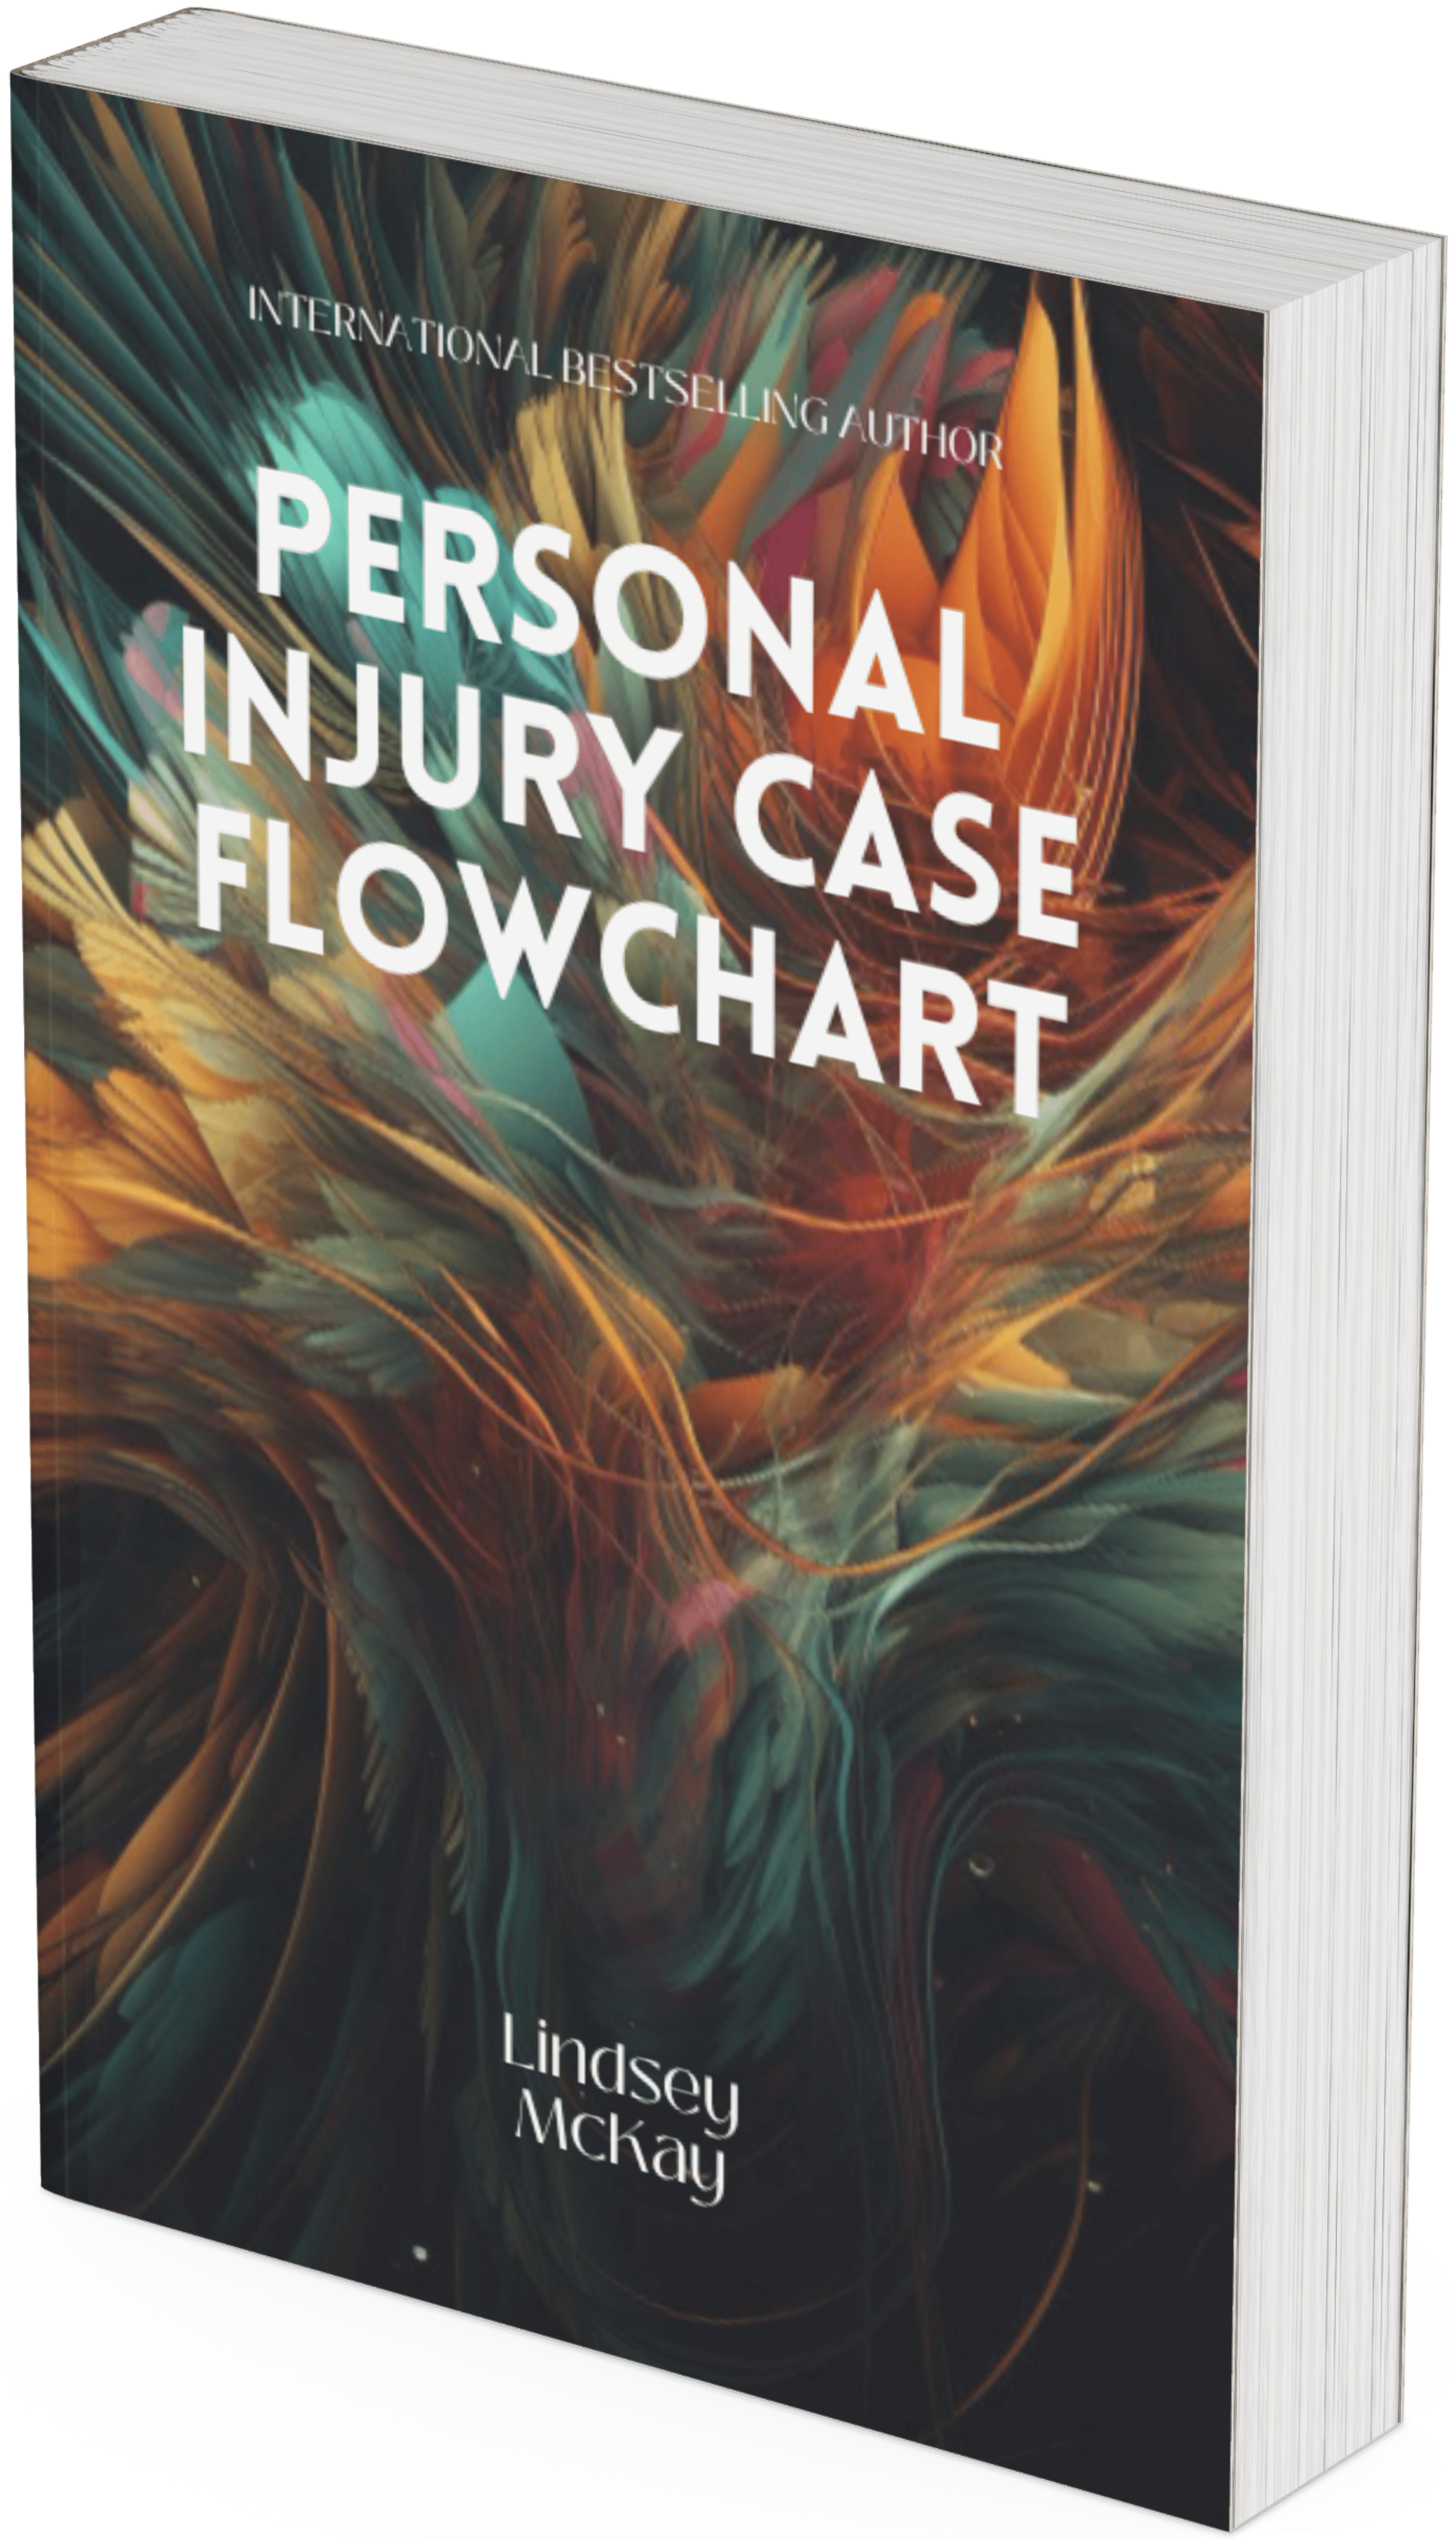 Personal Injury Case Flowchart​